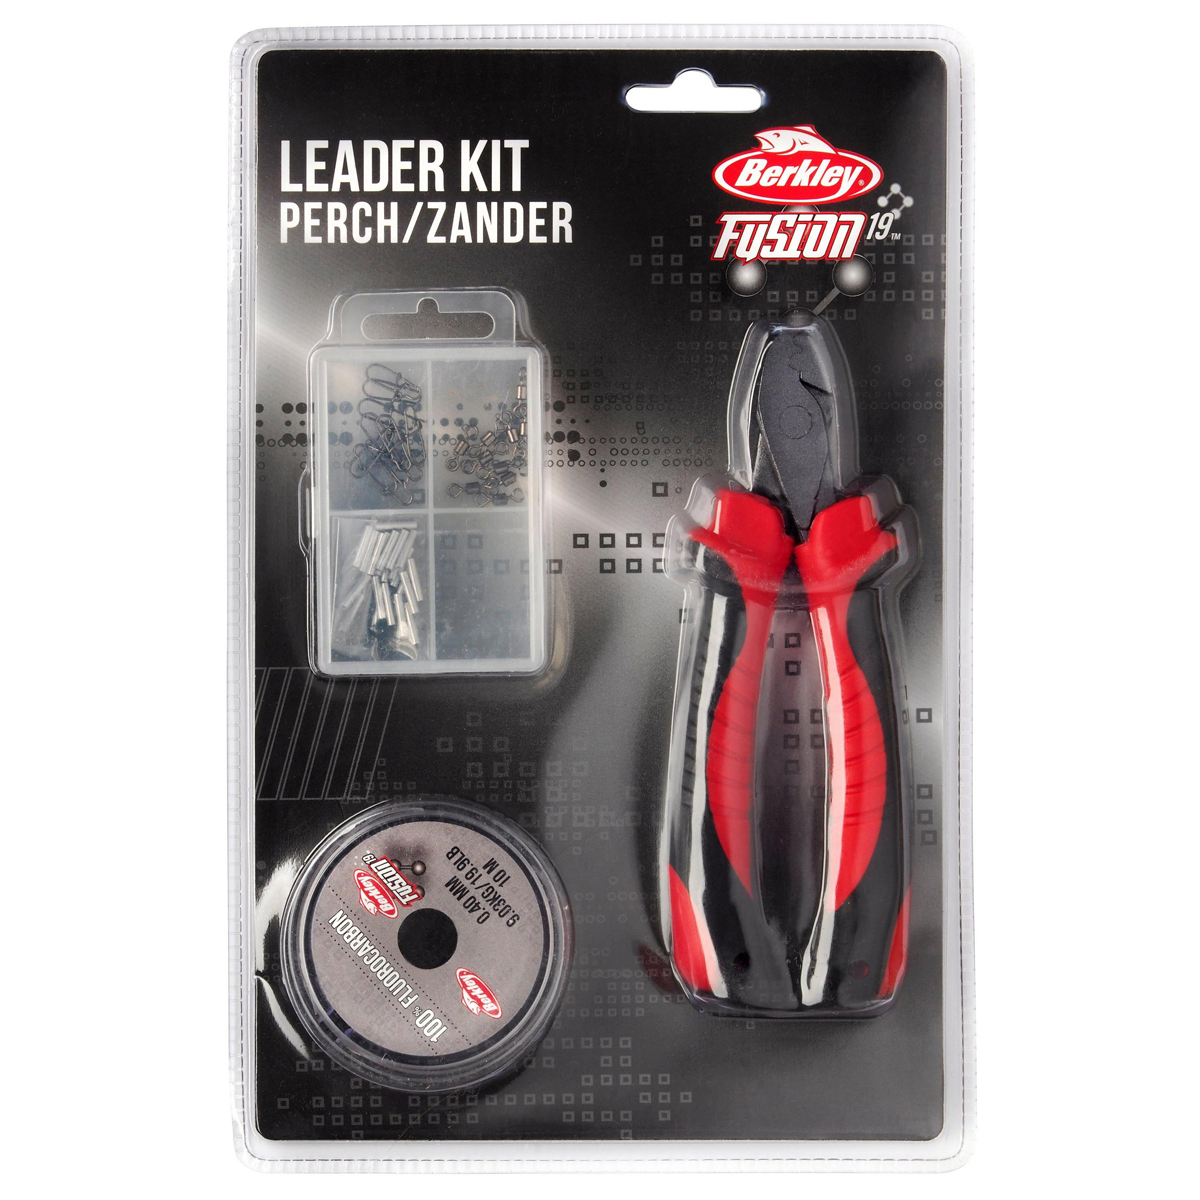 Berkley Fusion19 Zander/Perch Leader Kit